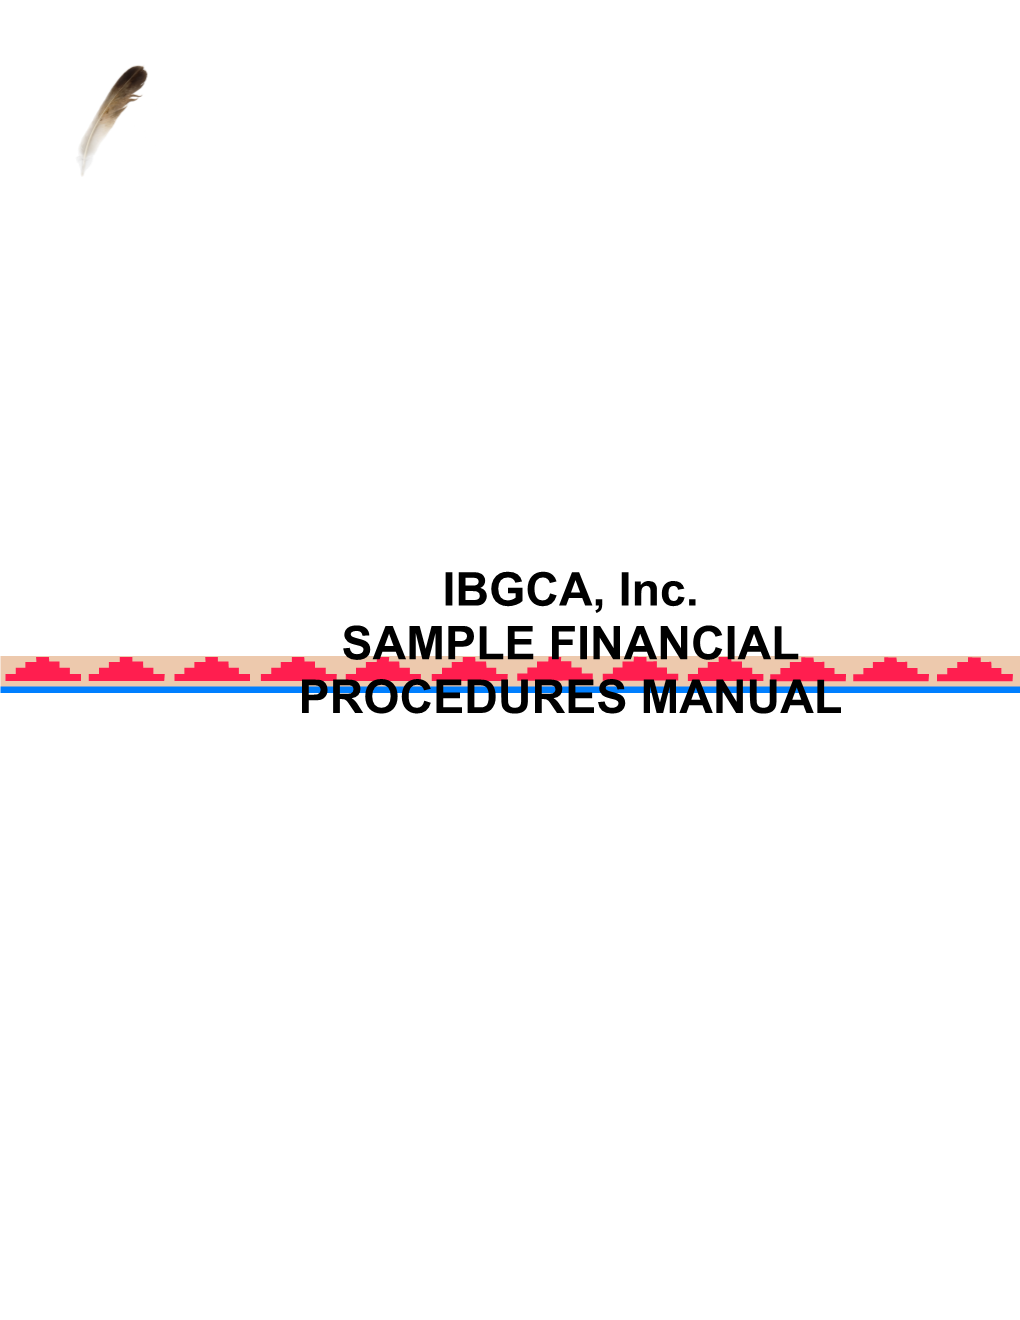 IBGCA, Inc. SAMPLE FINANCIAL